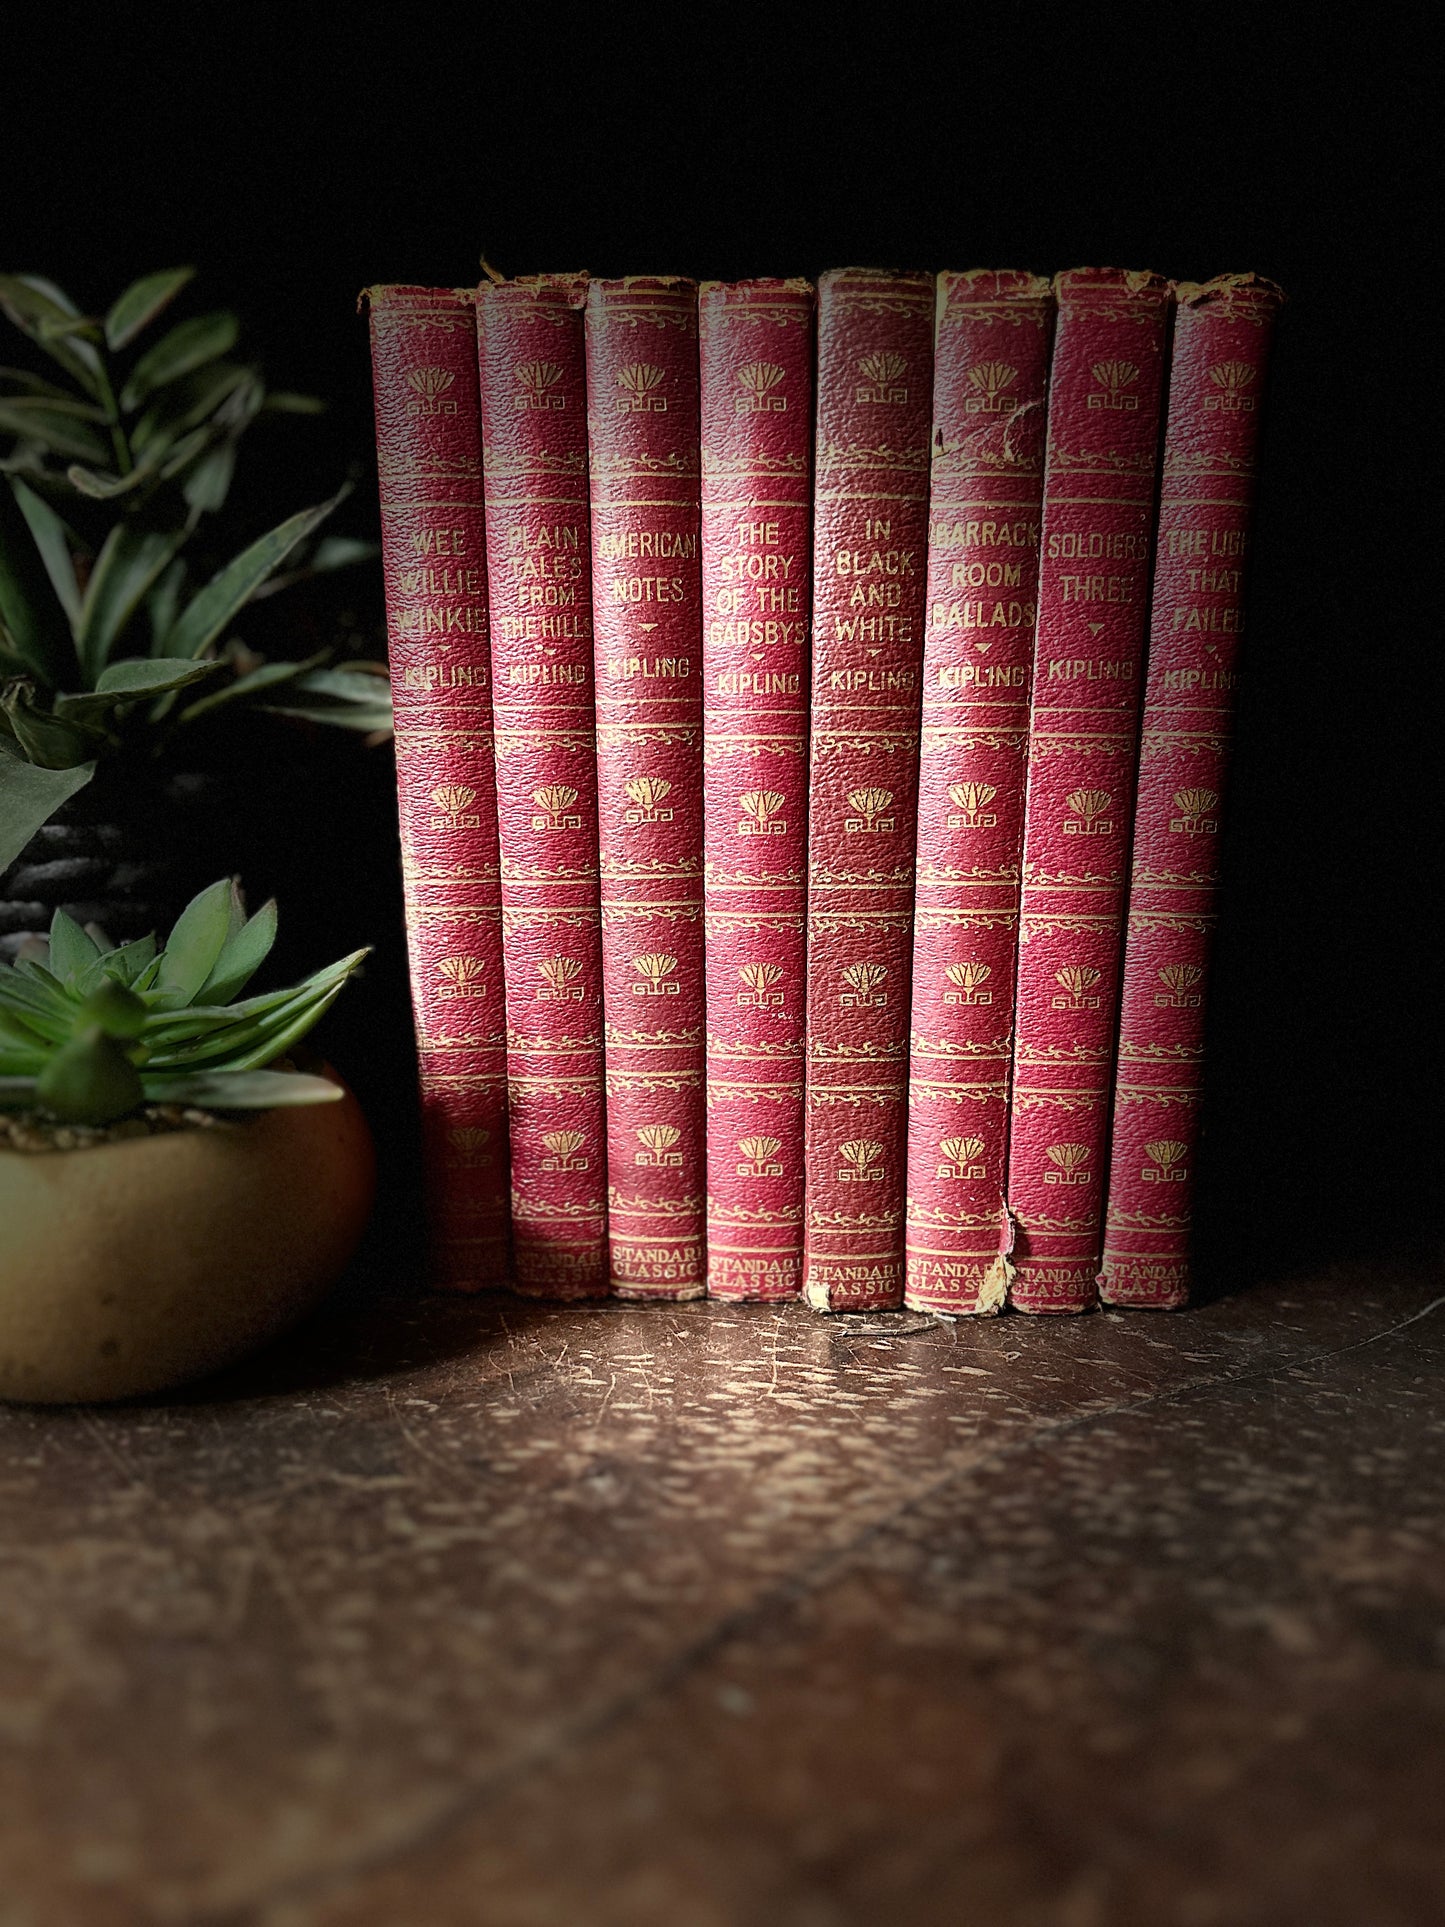 Vintage Rudyard Kipling book collection, 1930, set of 8